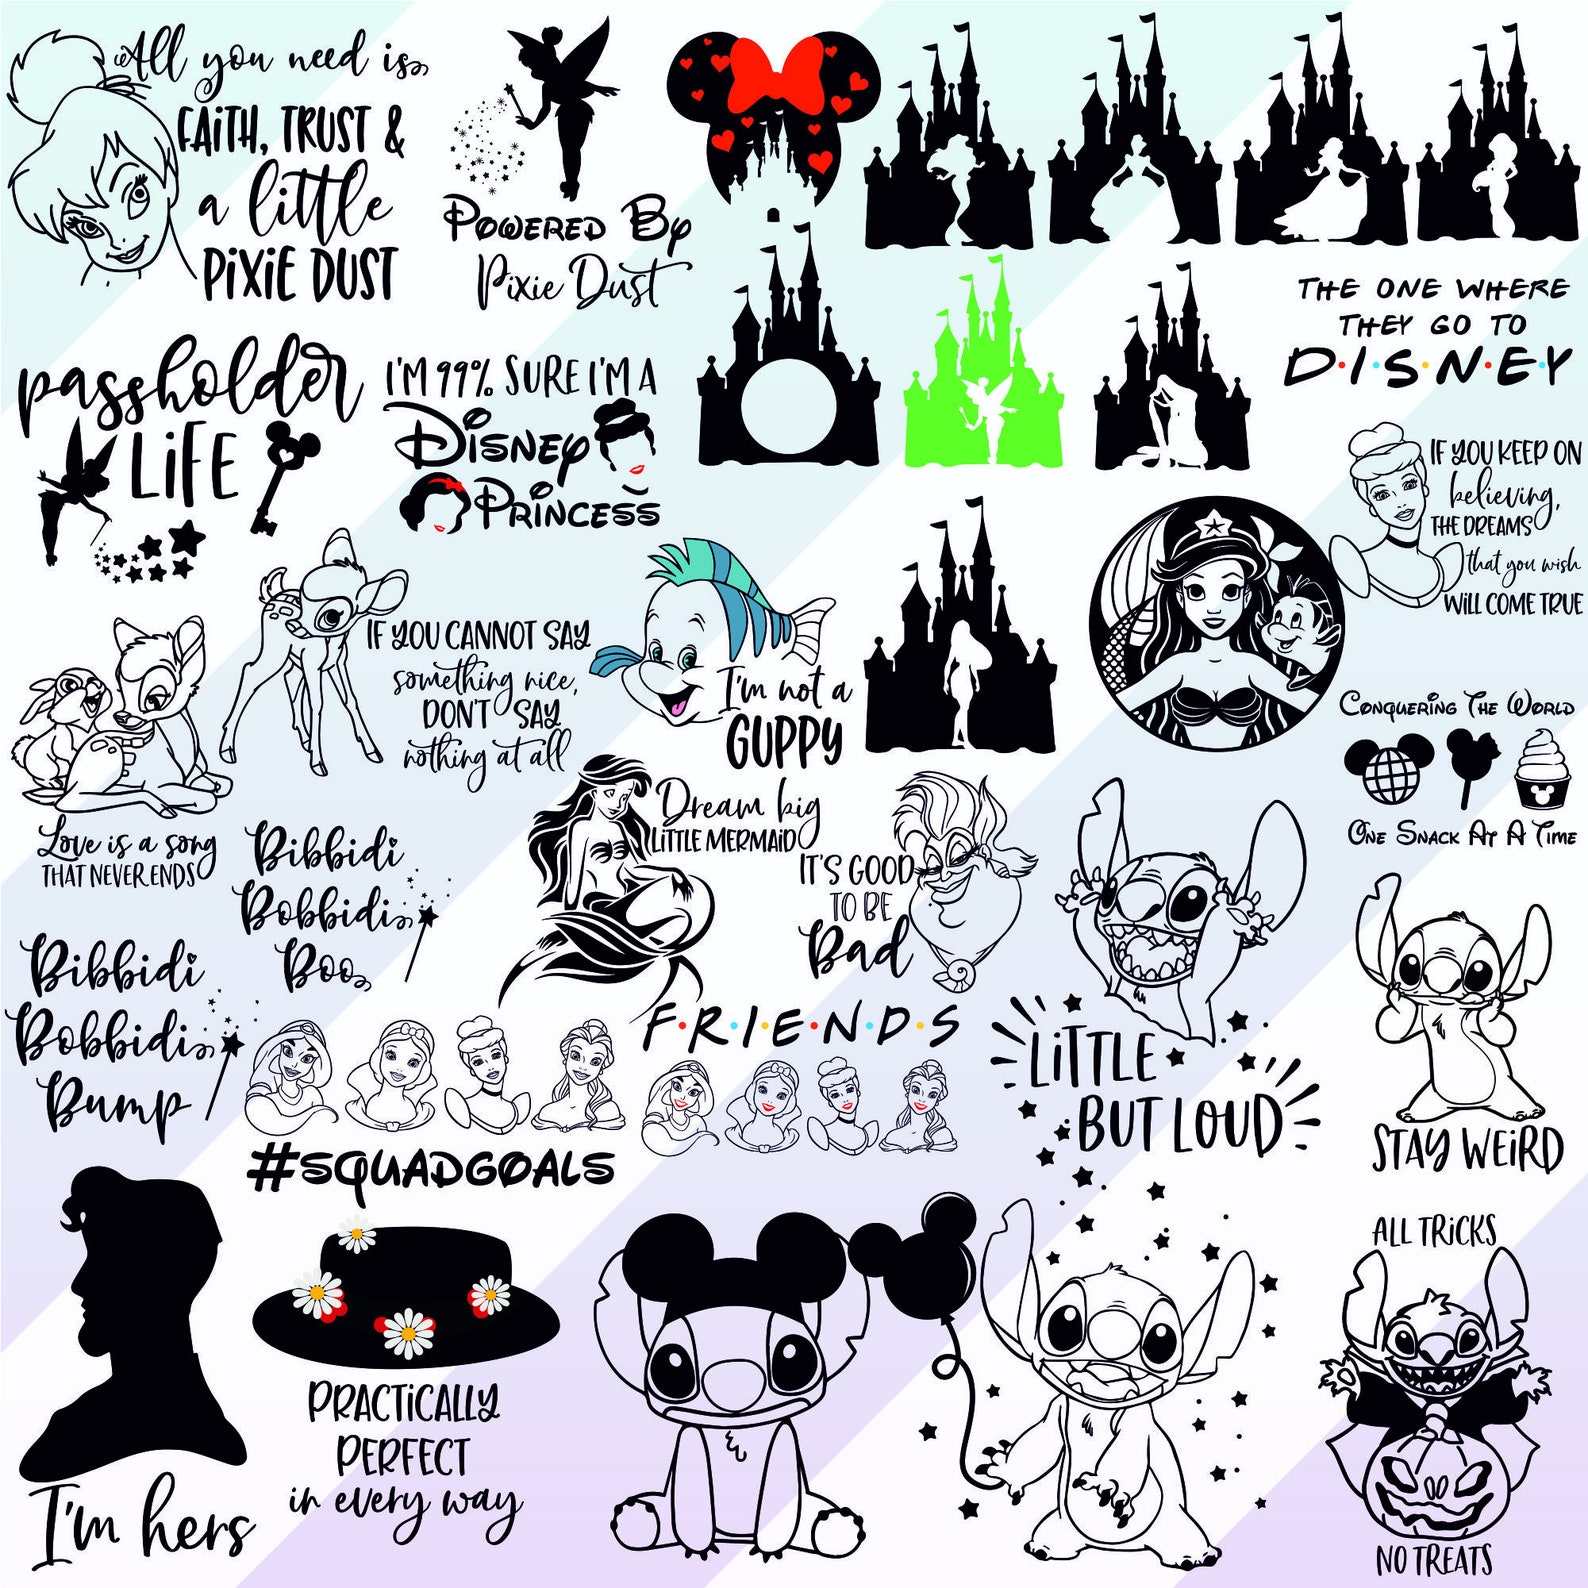 Main Disney characters.